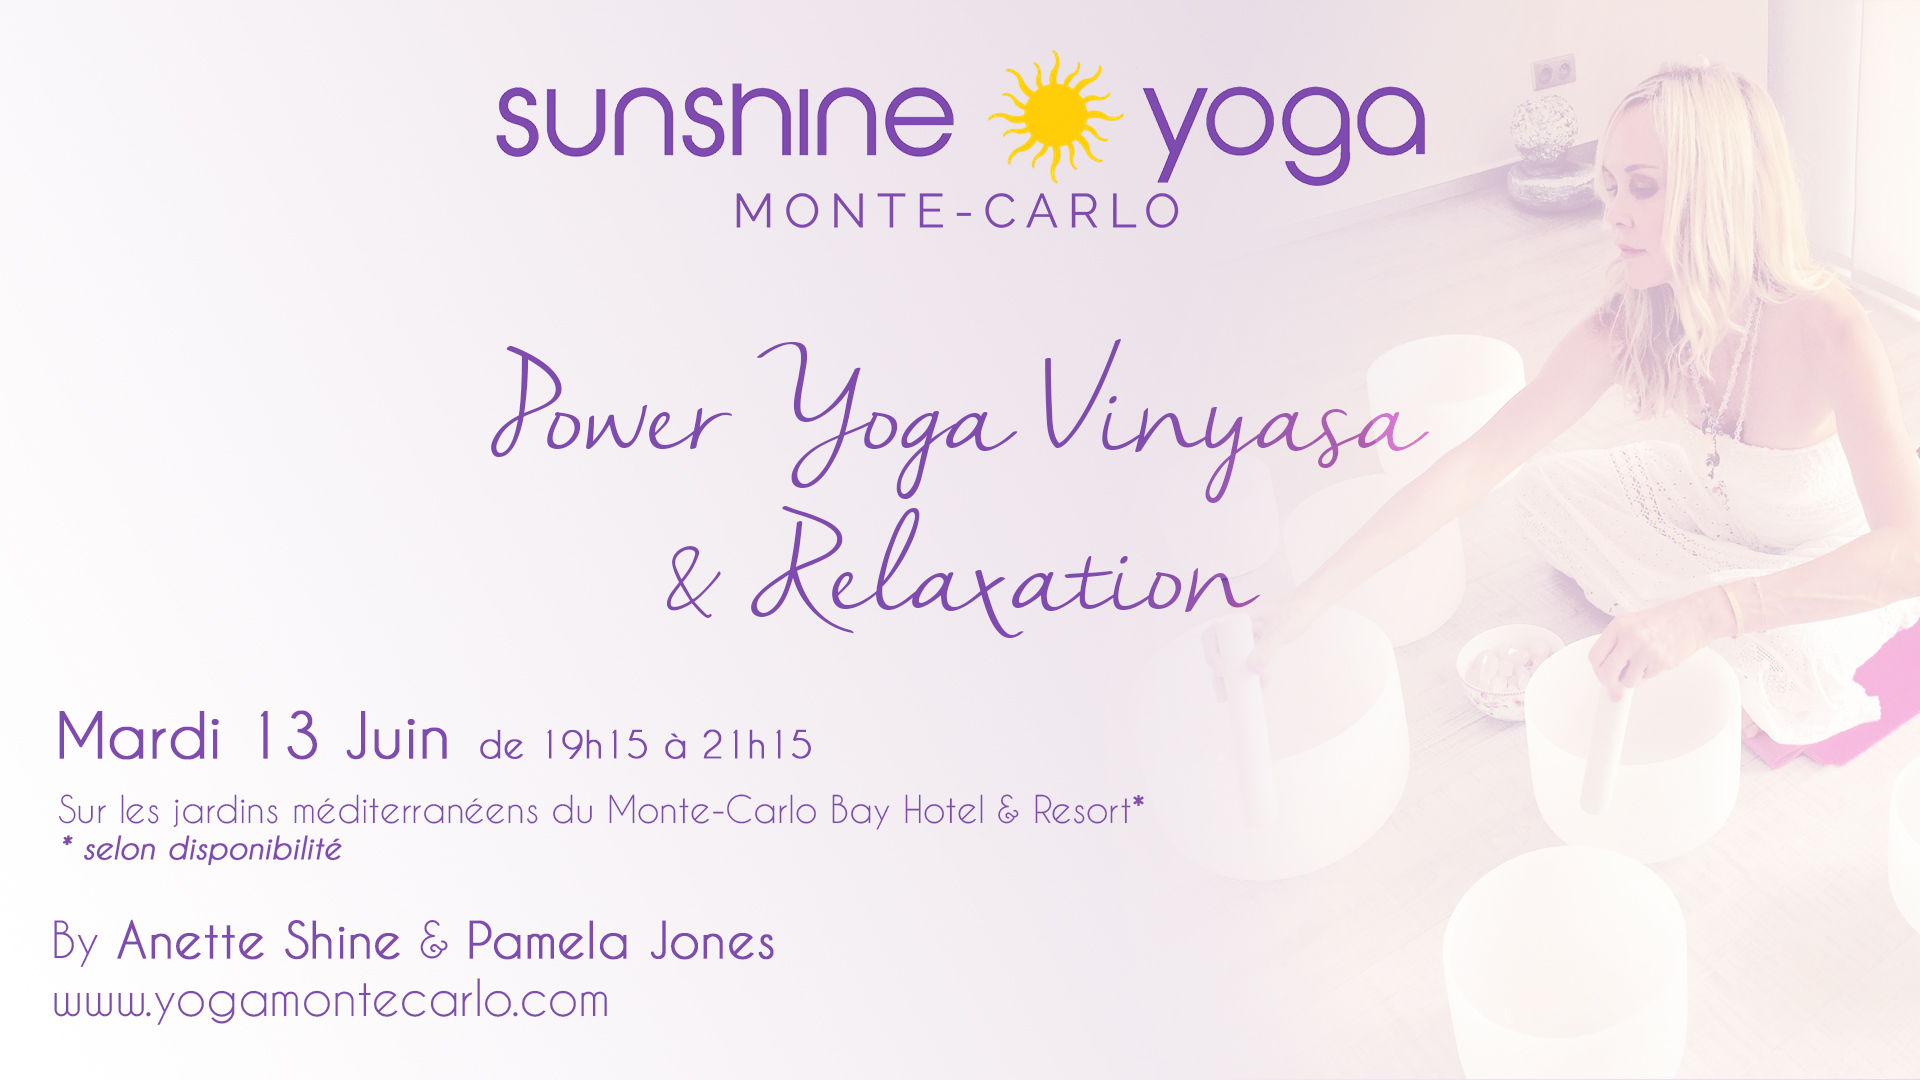 You are currently viewing Power Yoga Vinyasa & Relaxation le 13 Juin avec Anette Shine & Pamela Jones